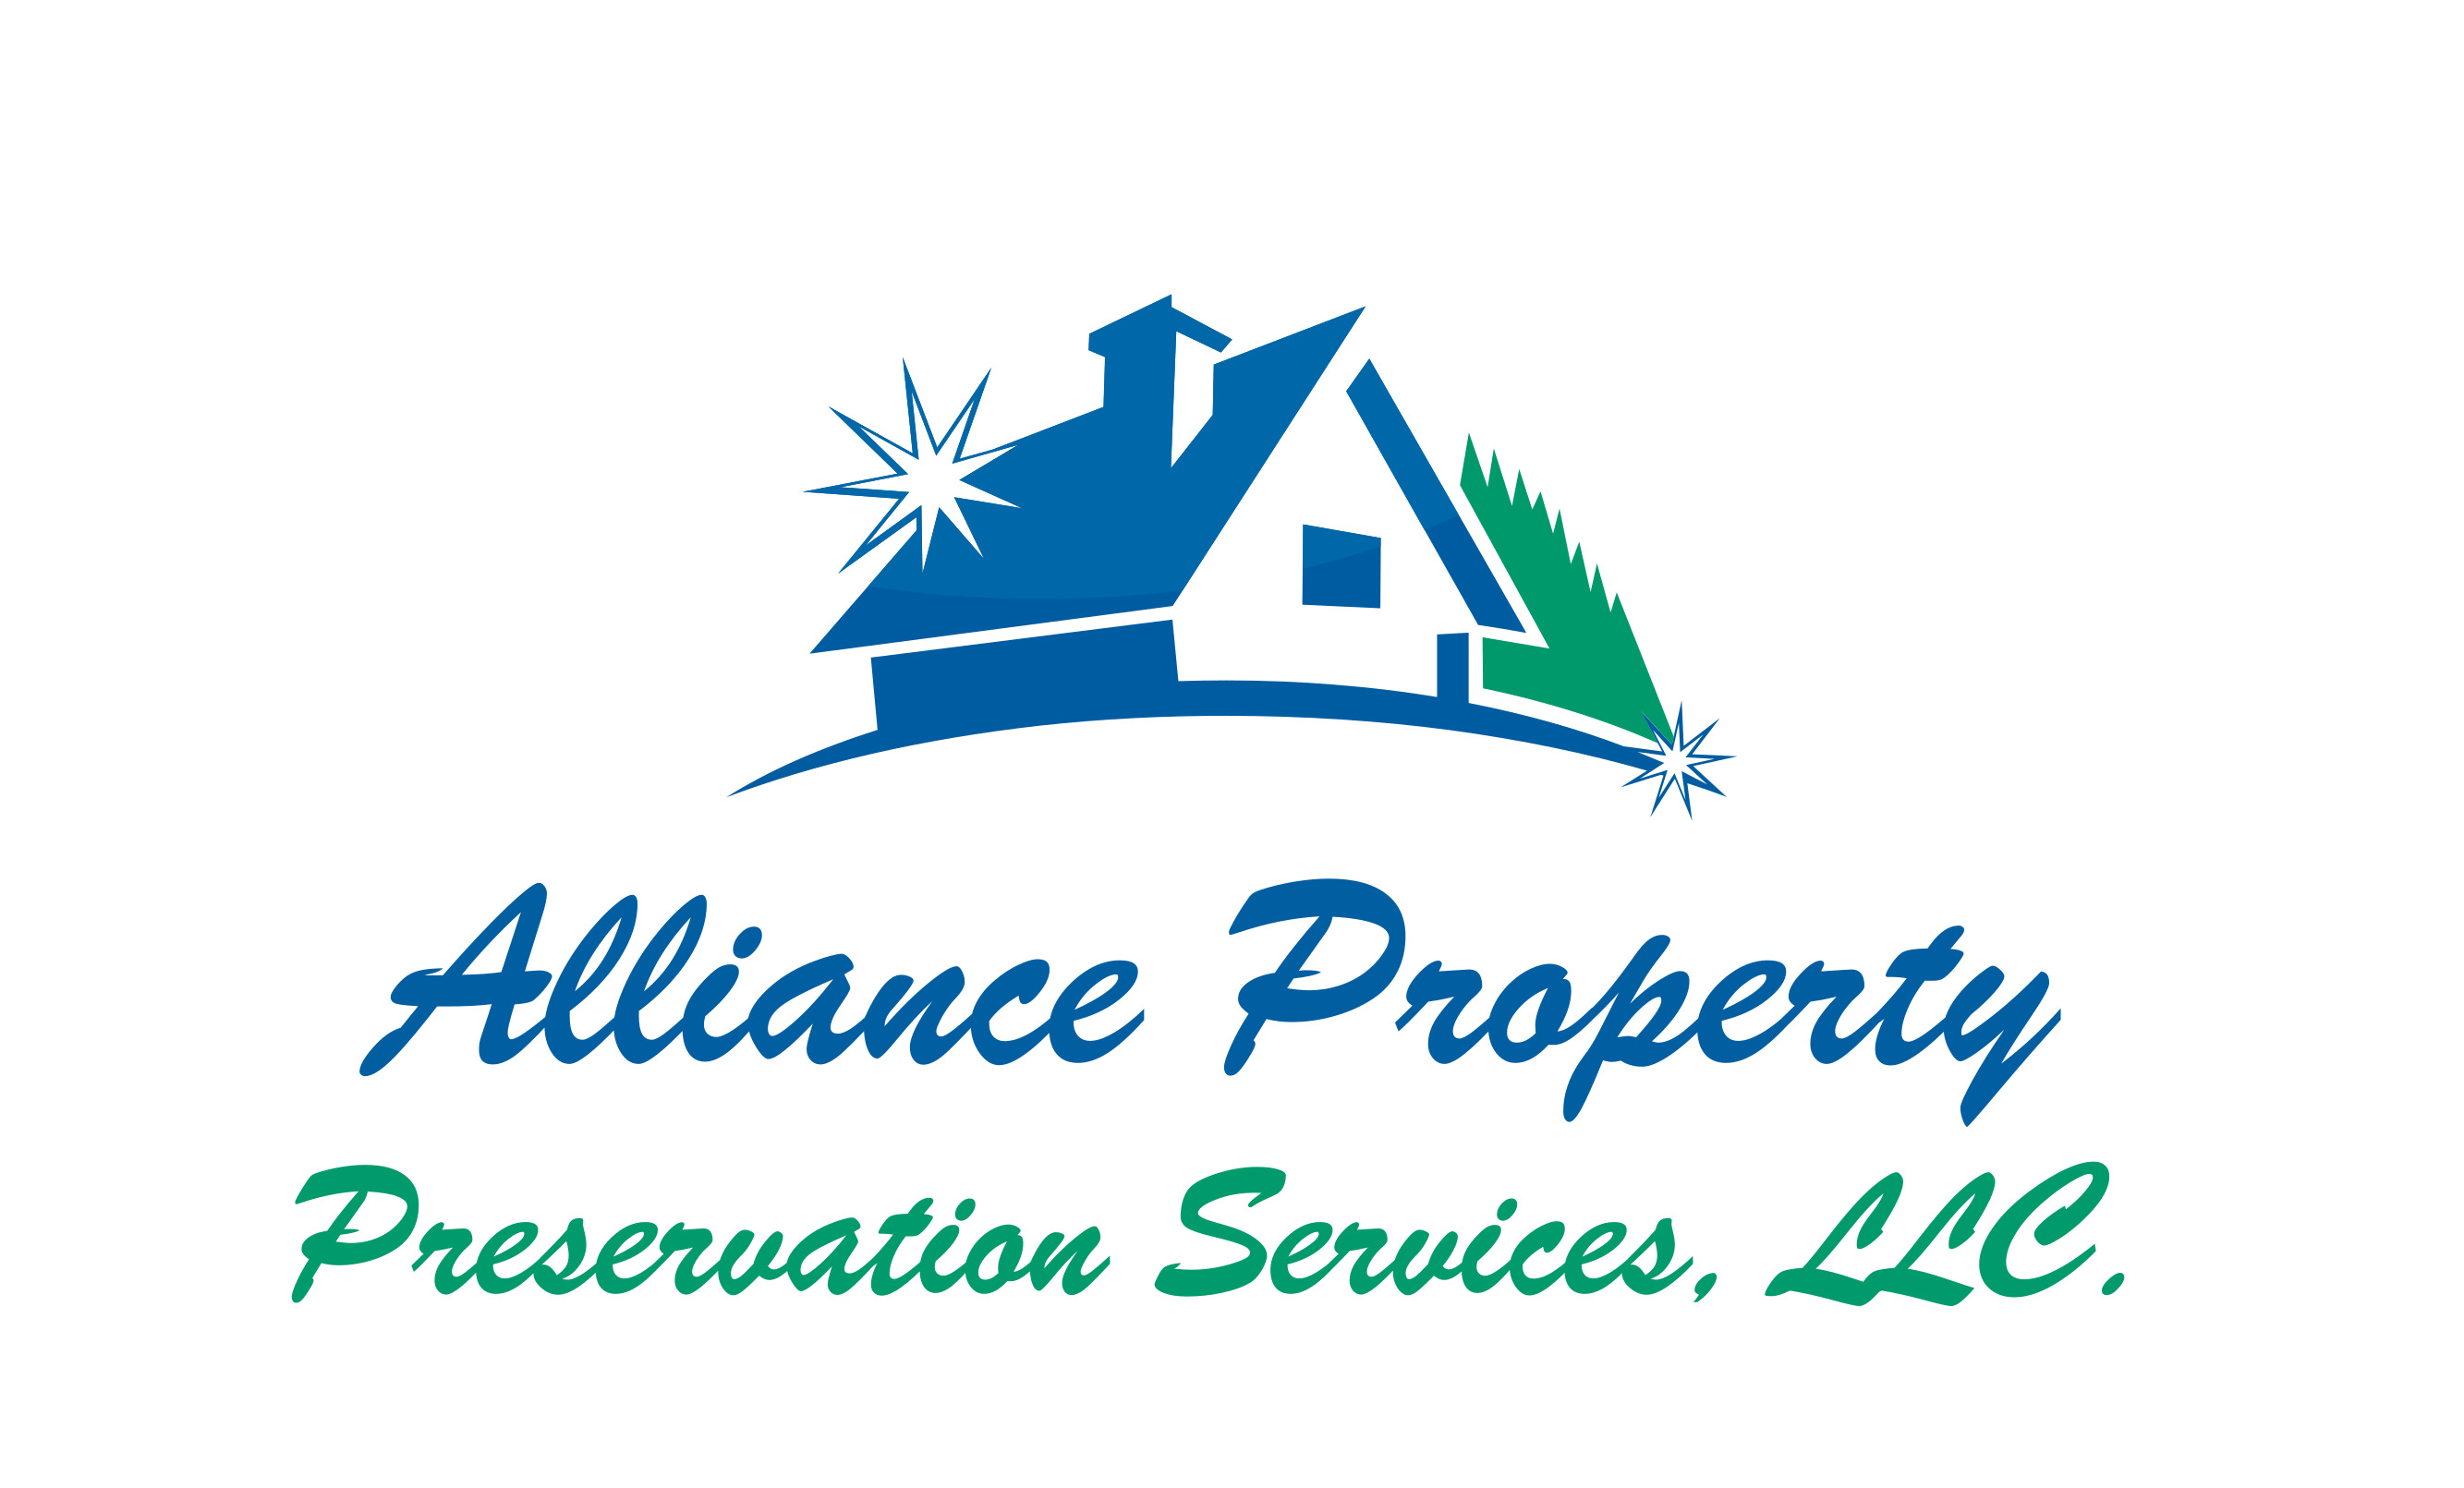 Alliance property preservation services LLC